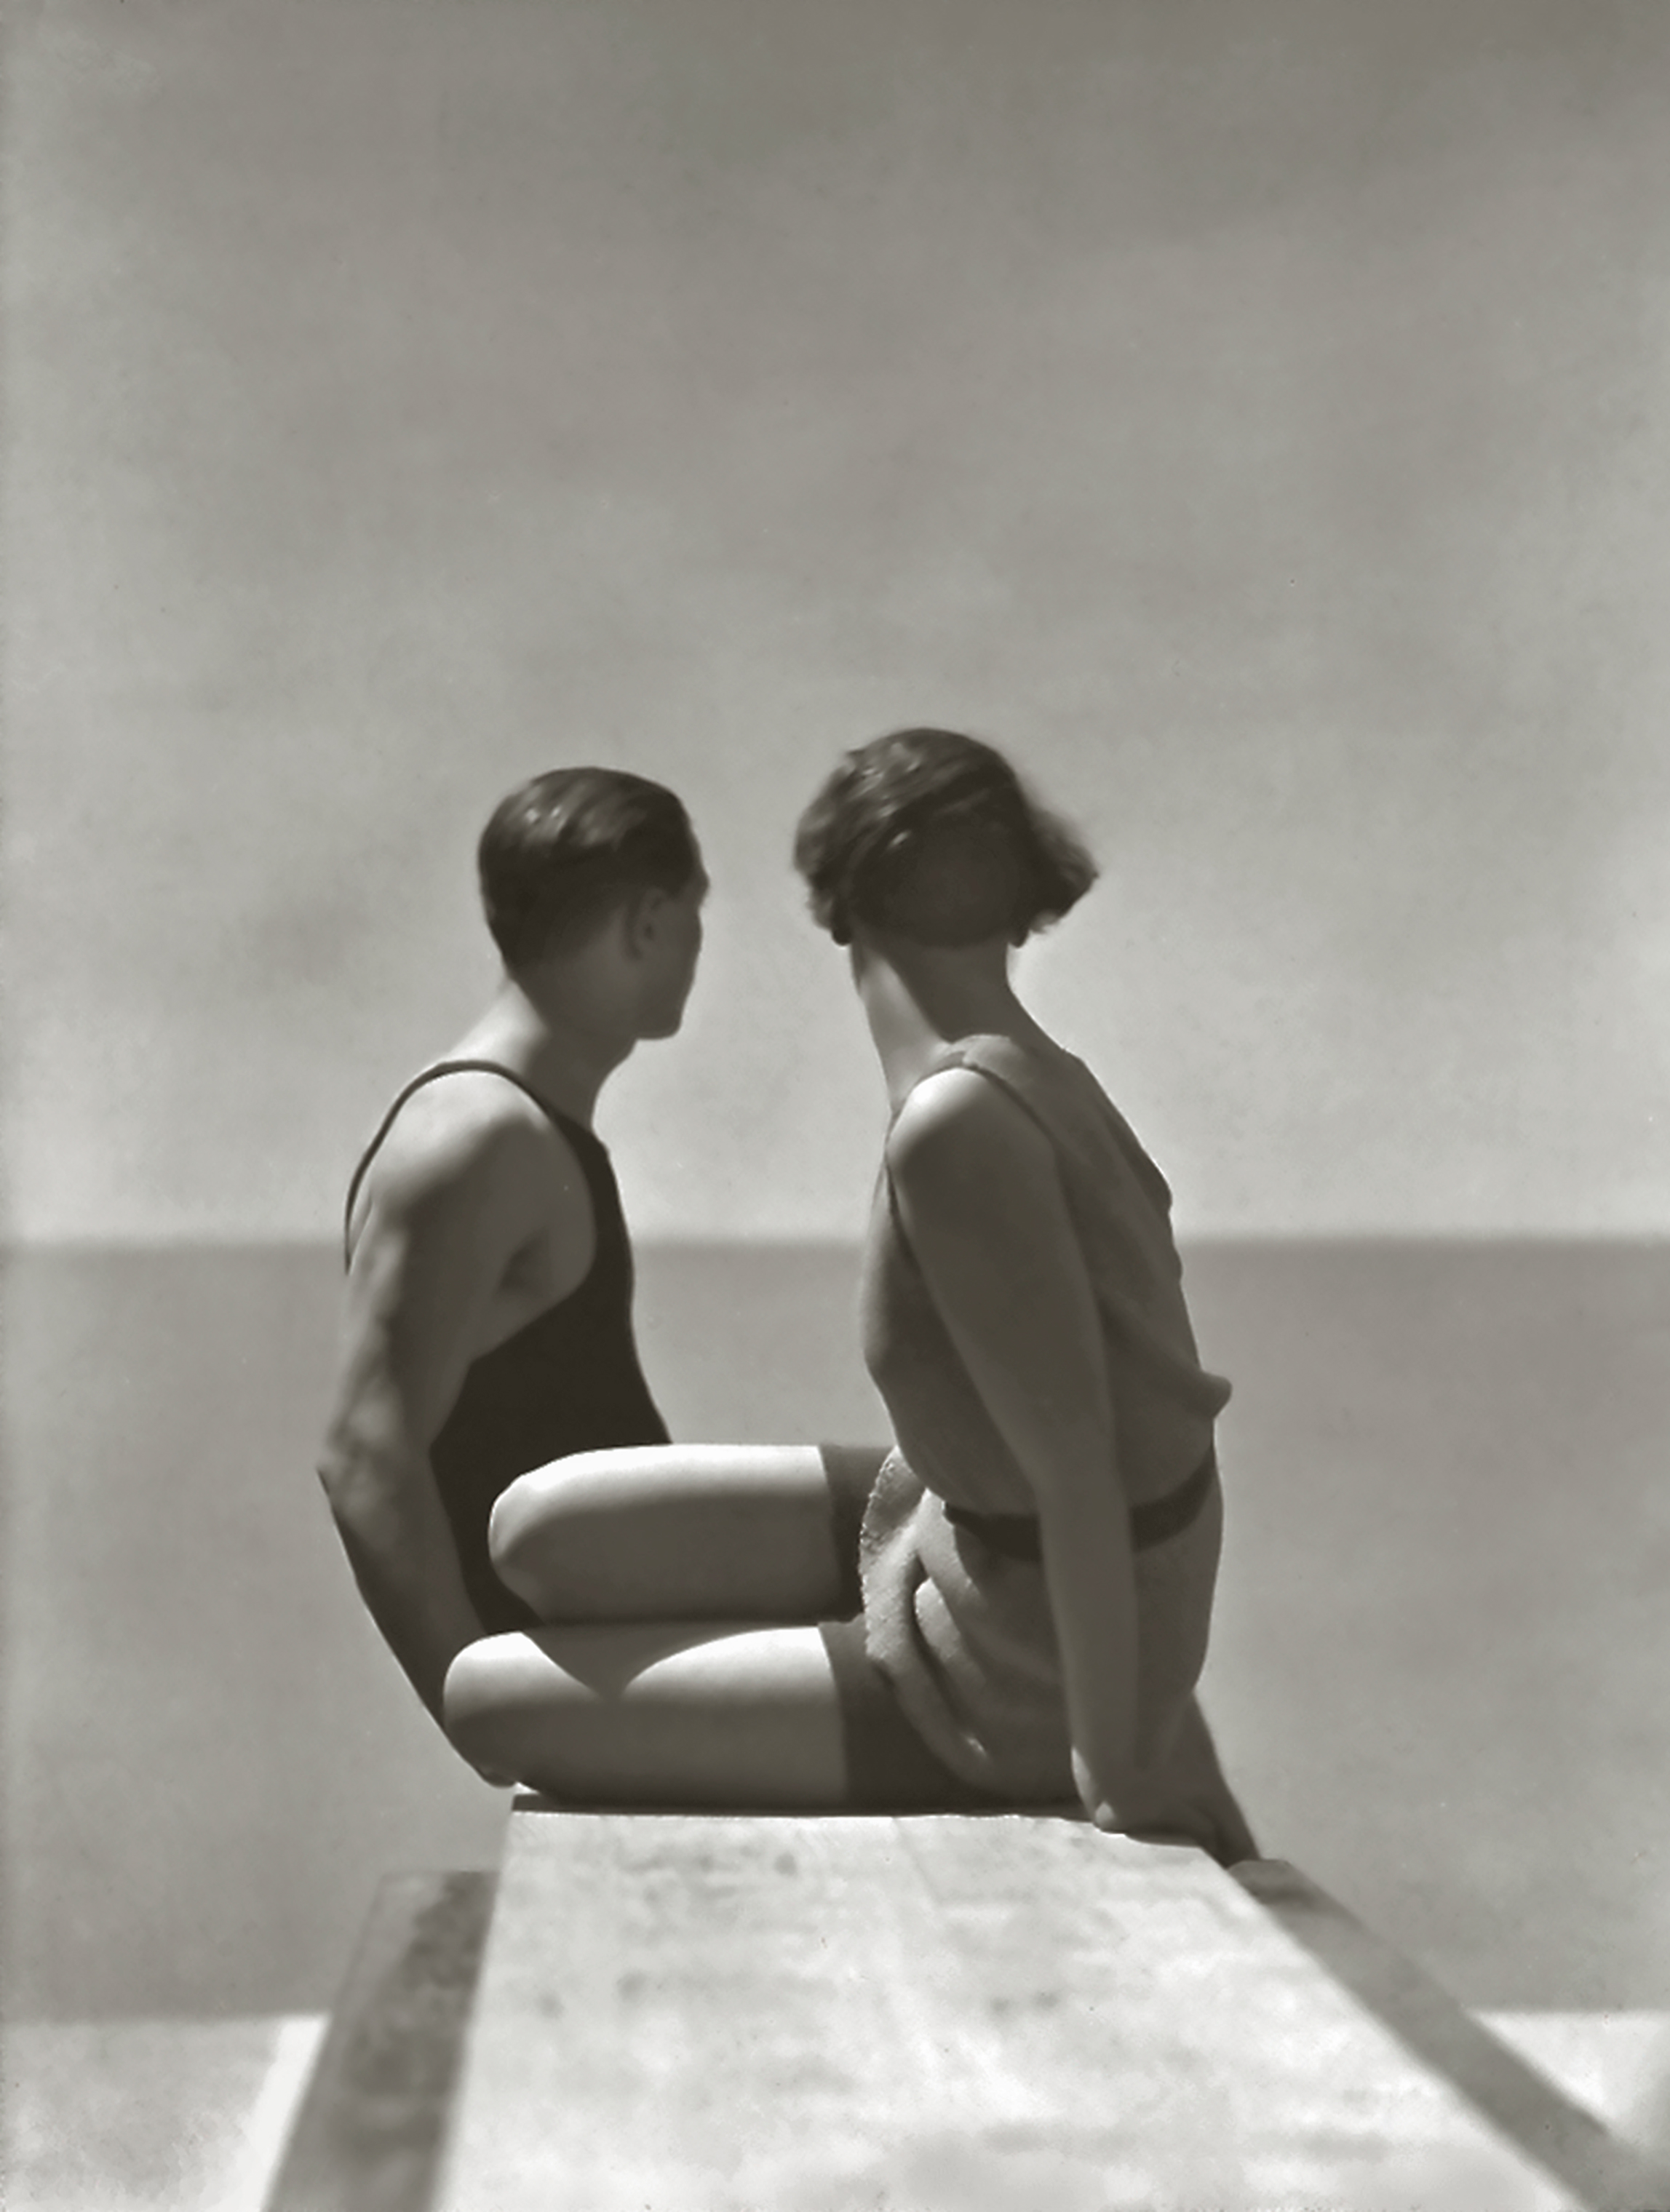 Bathing Suits by Izod, Paris, 1930 (George Hoyningen-Huene—Horst/Richard and Allison Roeder/J. Paul Getty Museum)